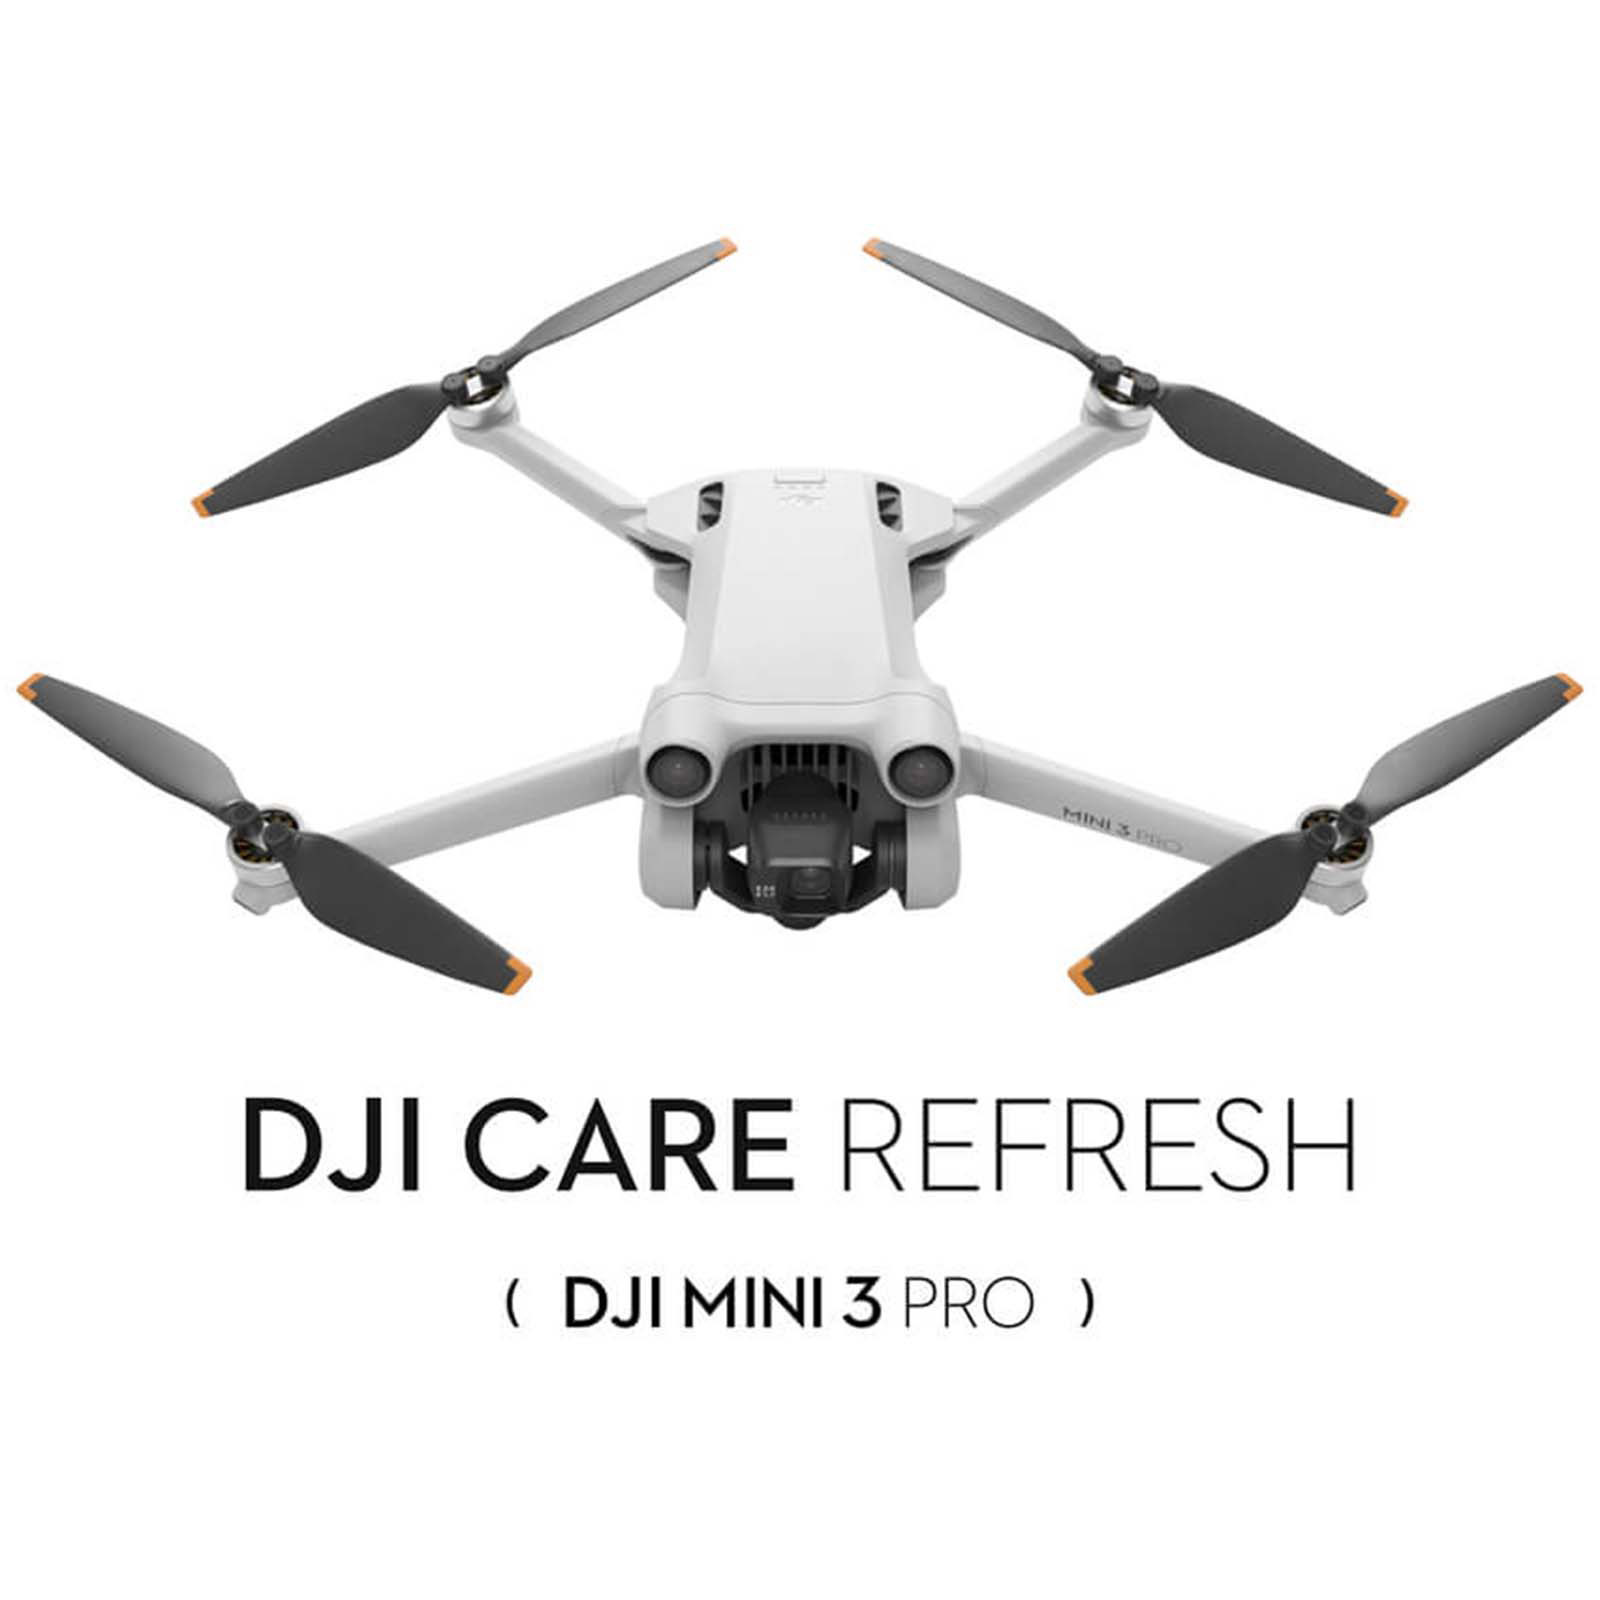 Image of DJI Mini 3 Pro Care Refresh Code -1 Year